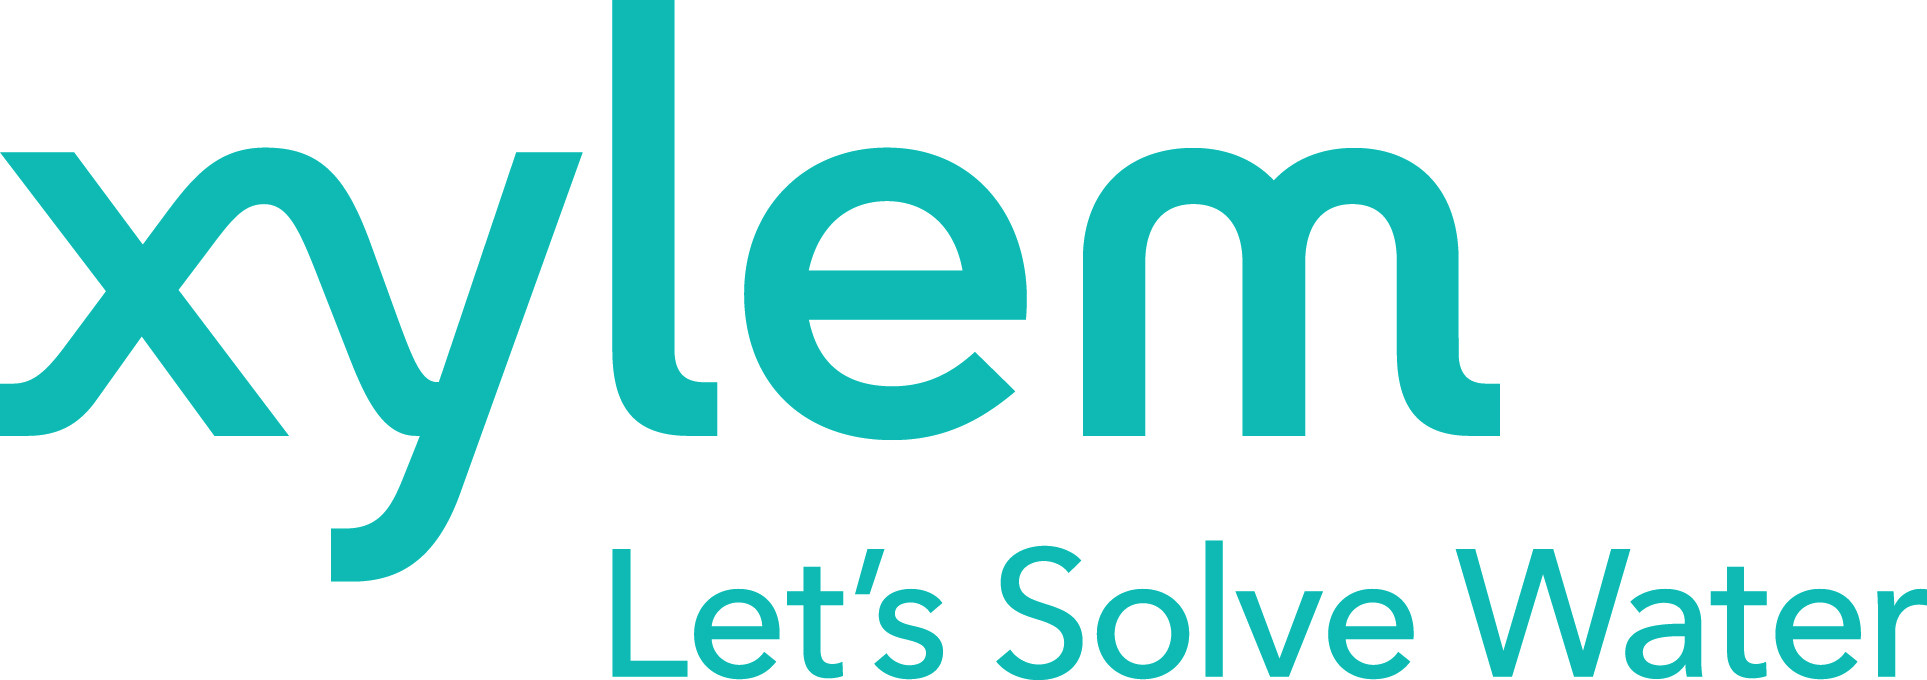 Xylem Water Solutions Poland Ltd 